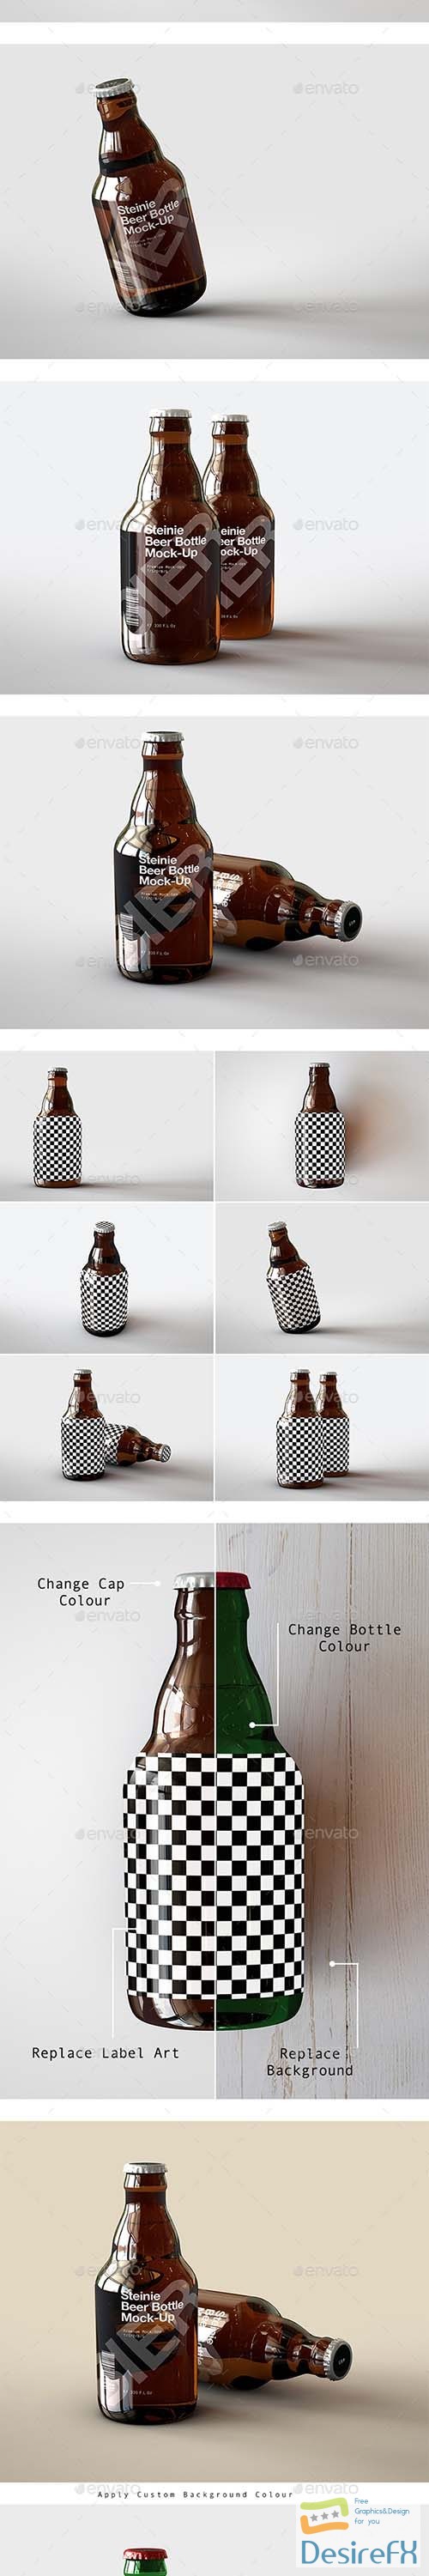 Beer Bottle Mock-Up | Steinie Edition 21402018